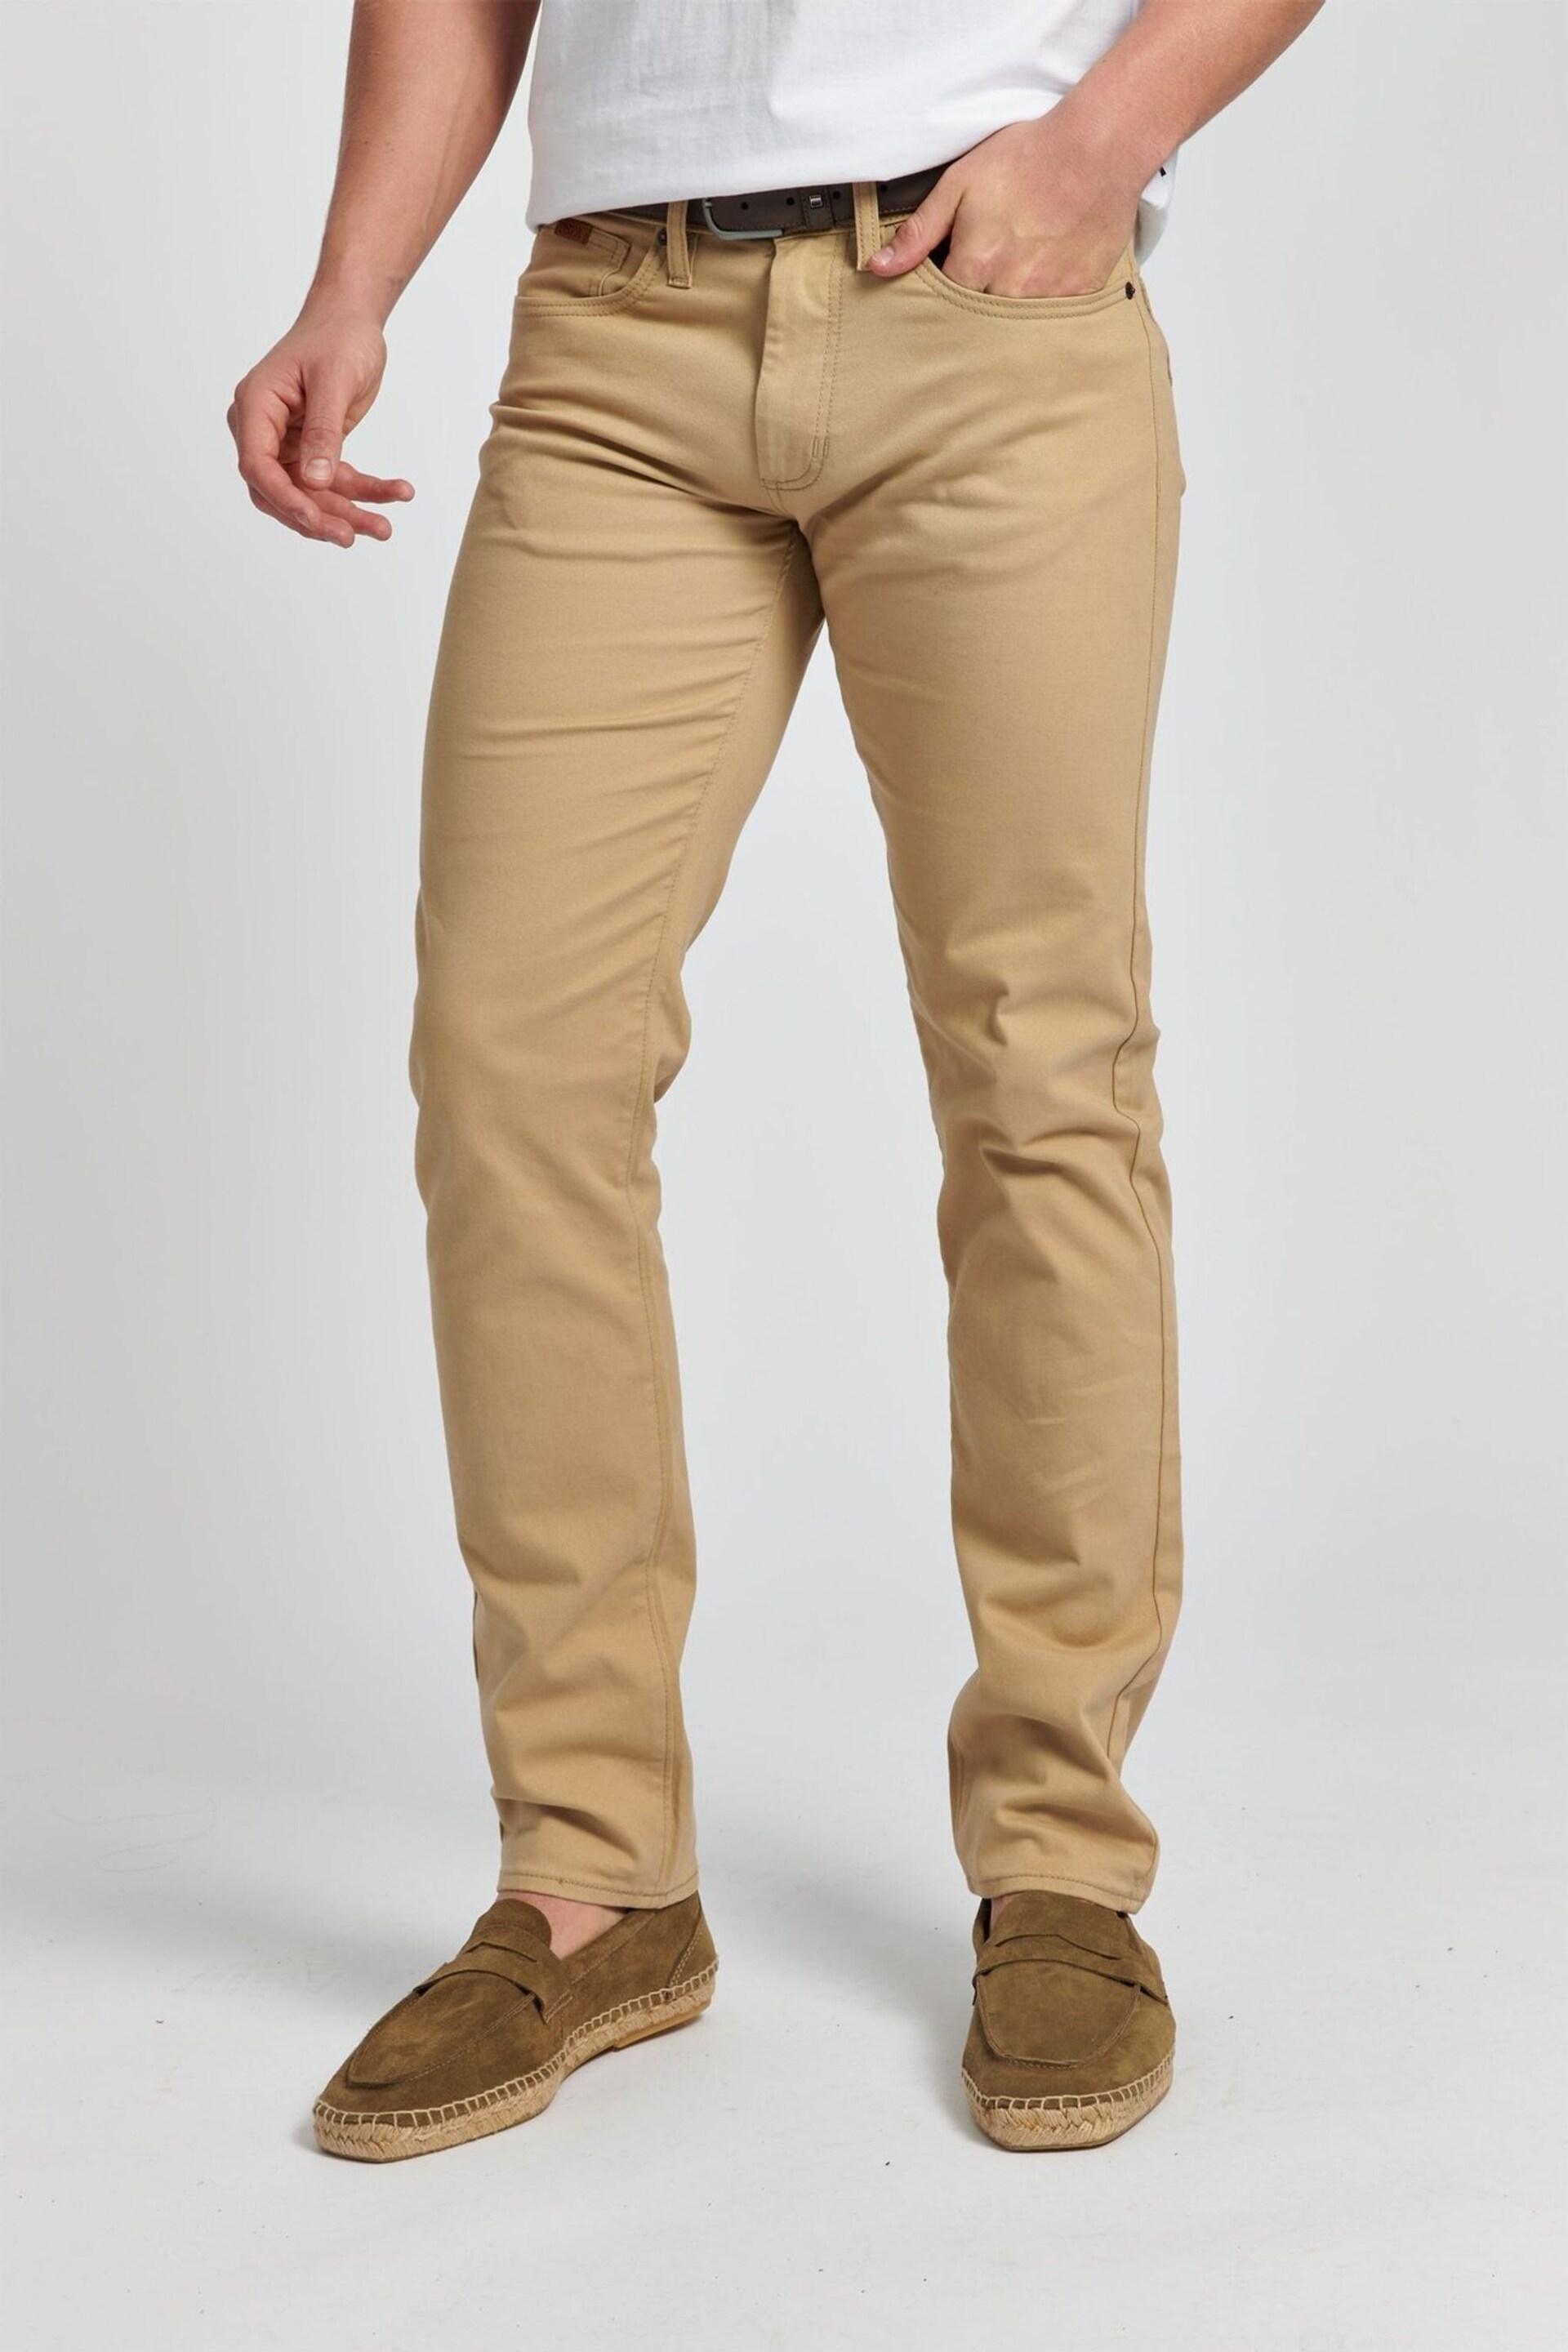 U.S. Polo Assn Tan USPA Woven Trousers - Image 1 of 4